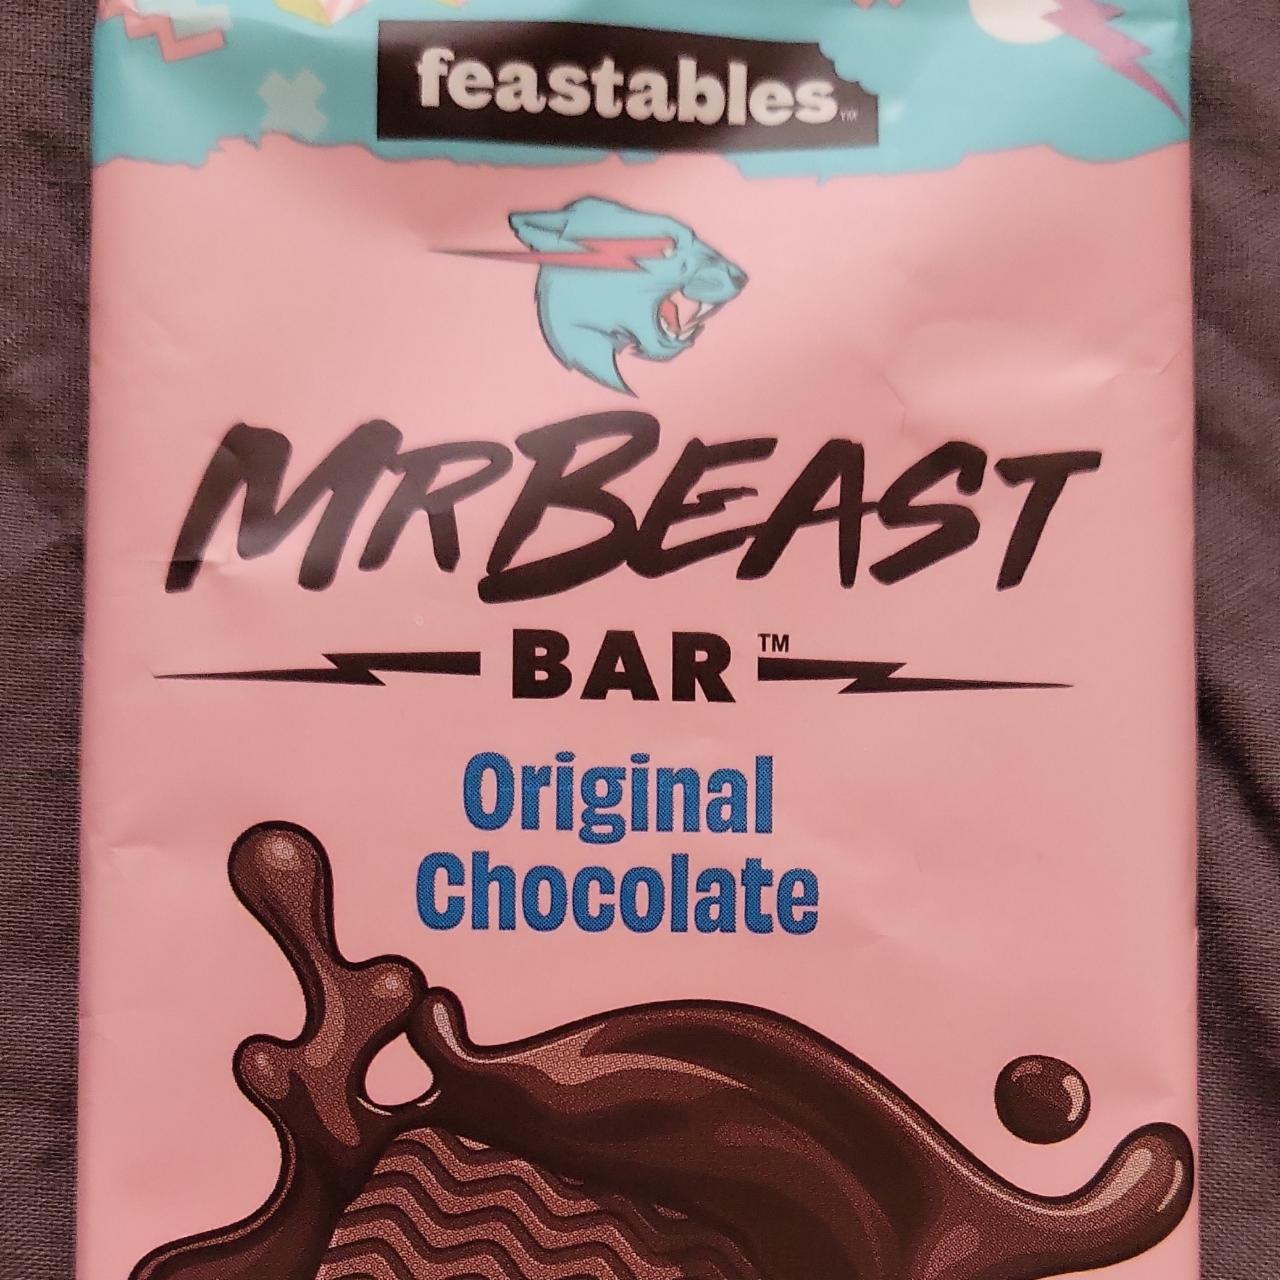 Fotografie - Mr Beast Bar Original chocolate Feastables